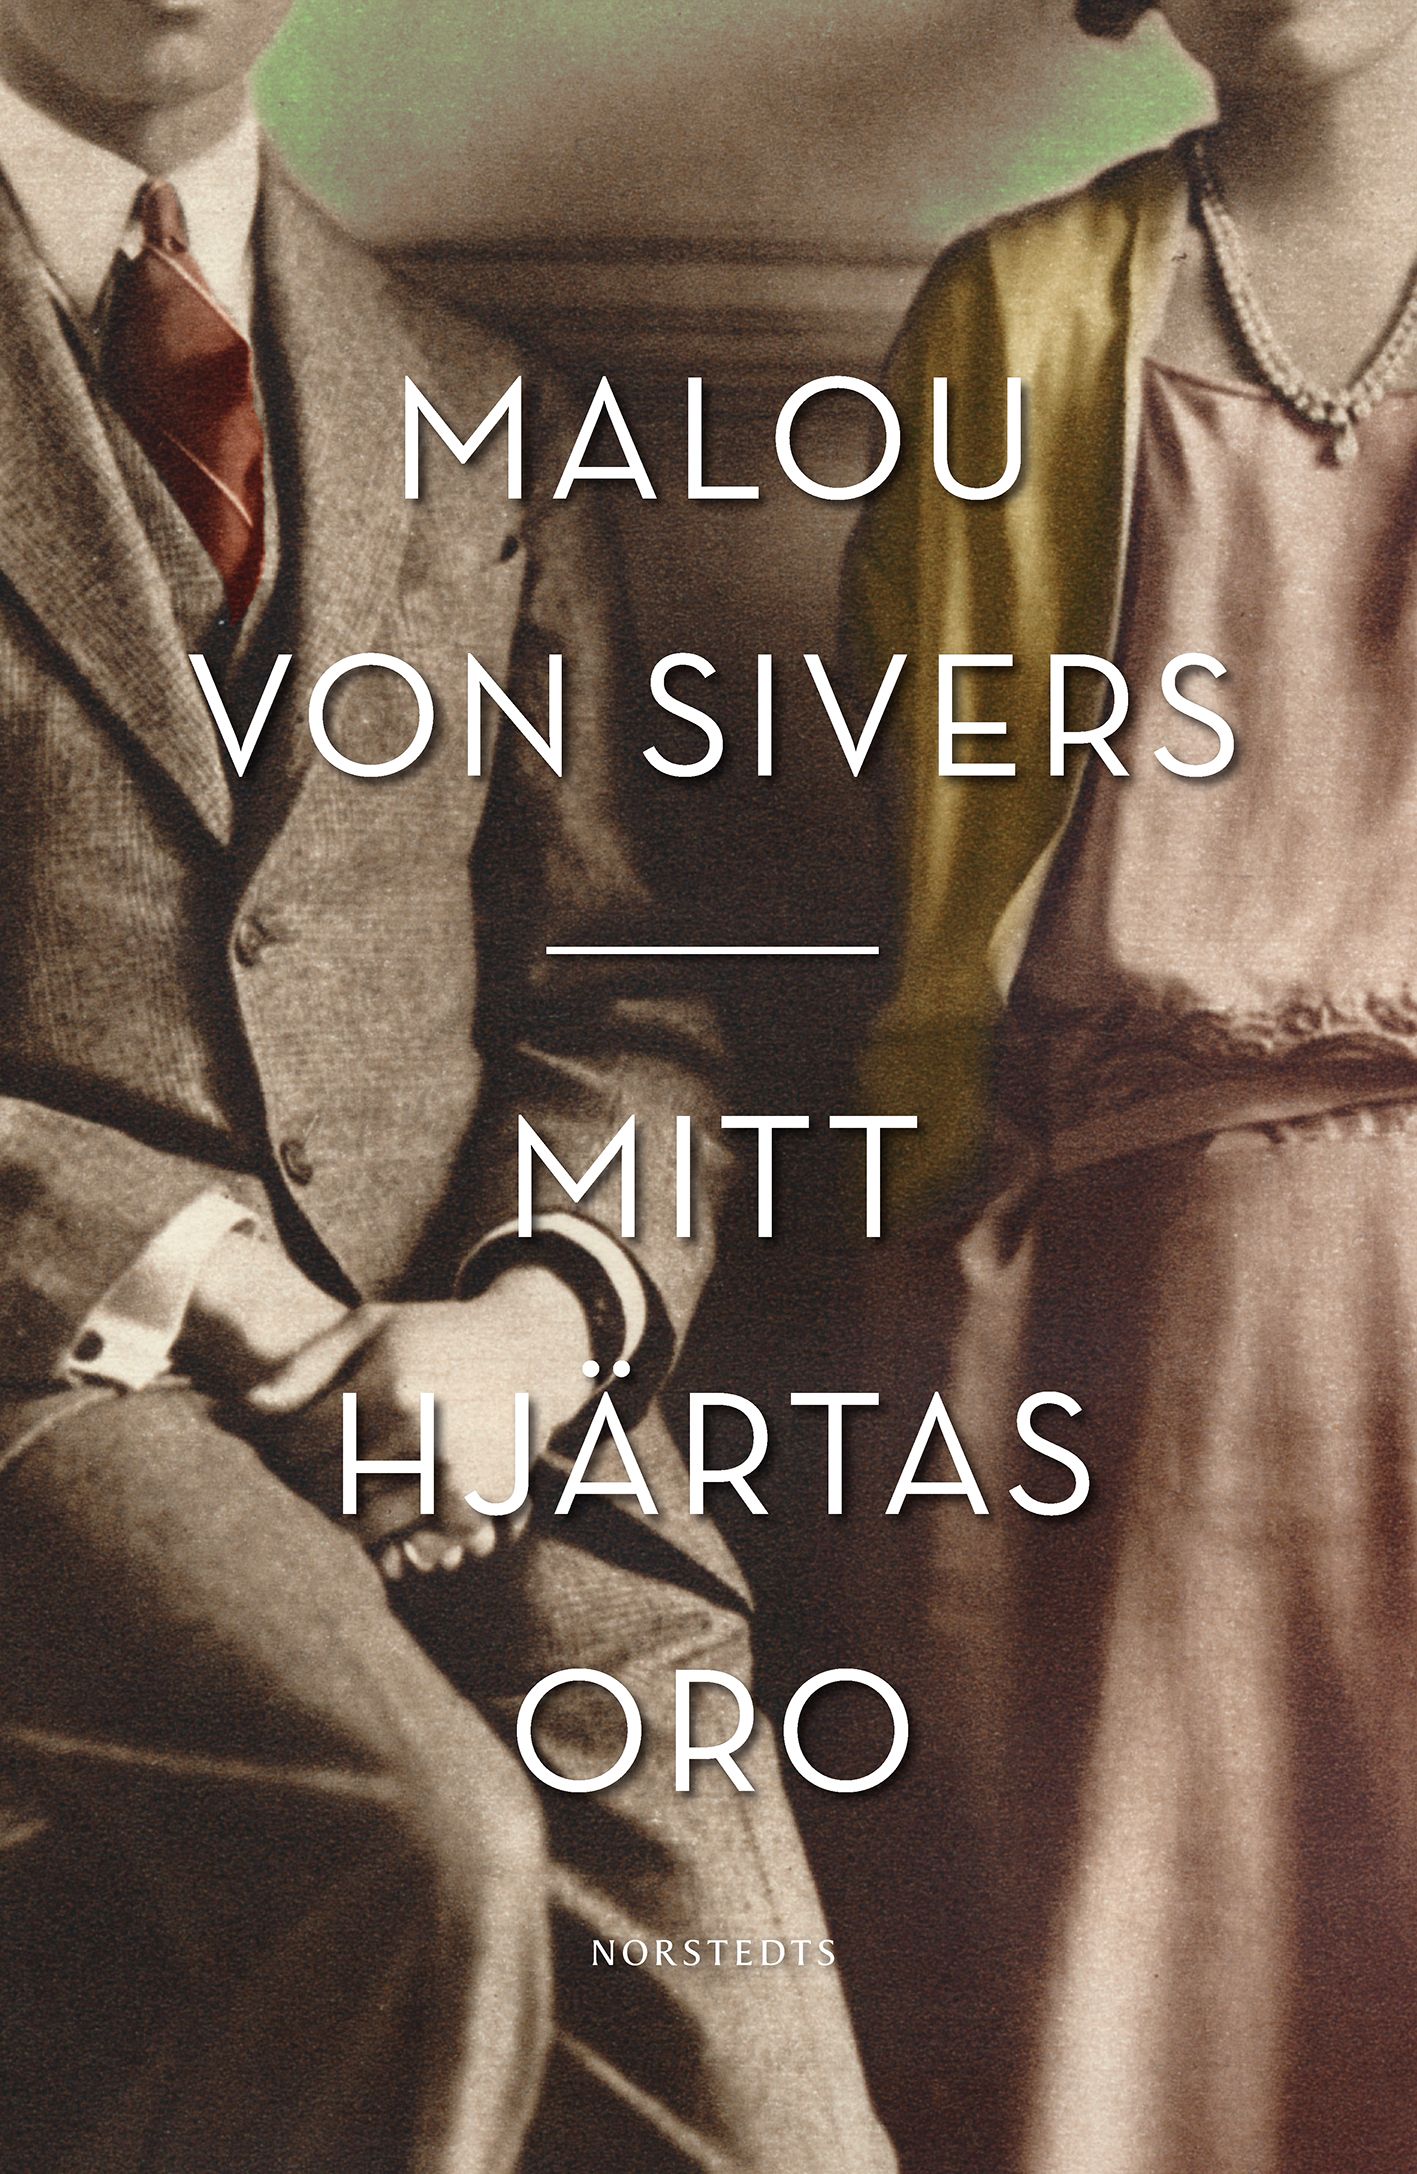 Mitt hjärtas oro, e-bok av Malou von Sivers